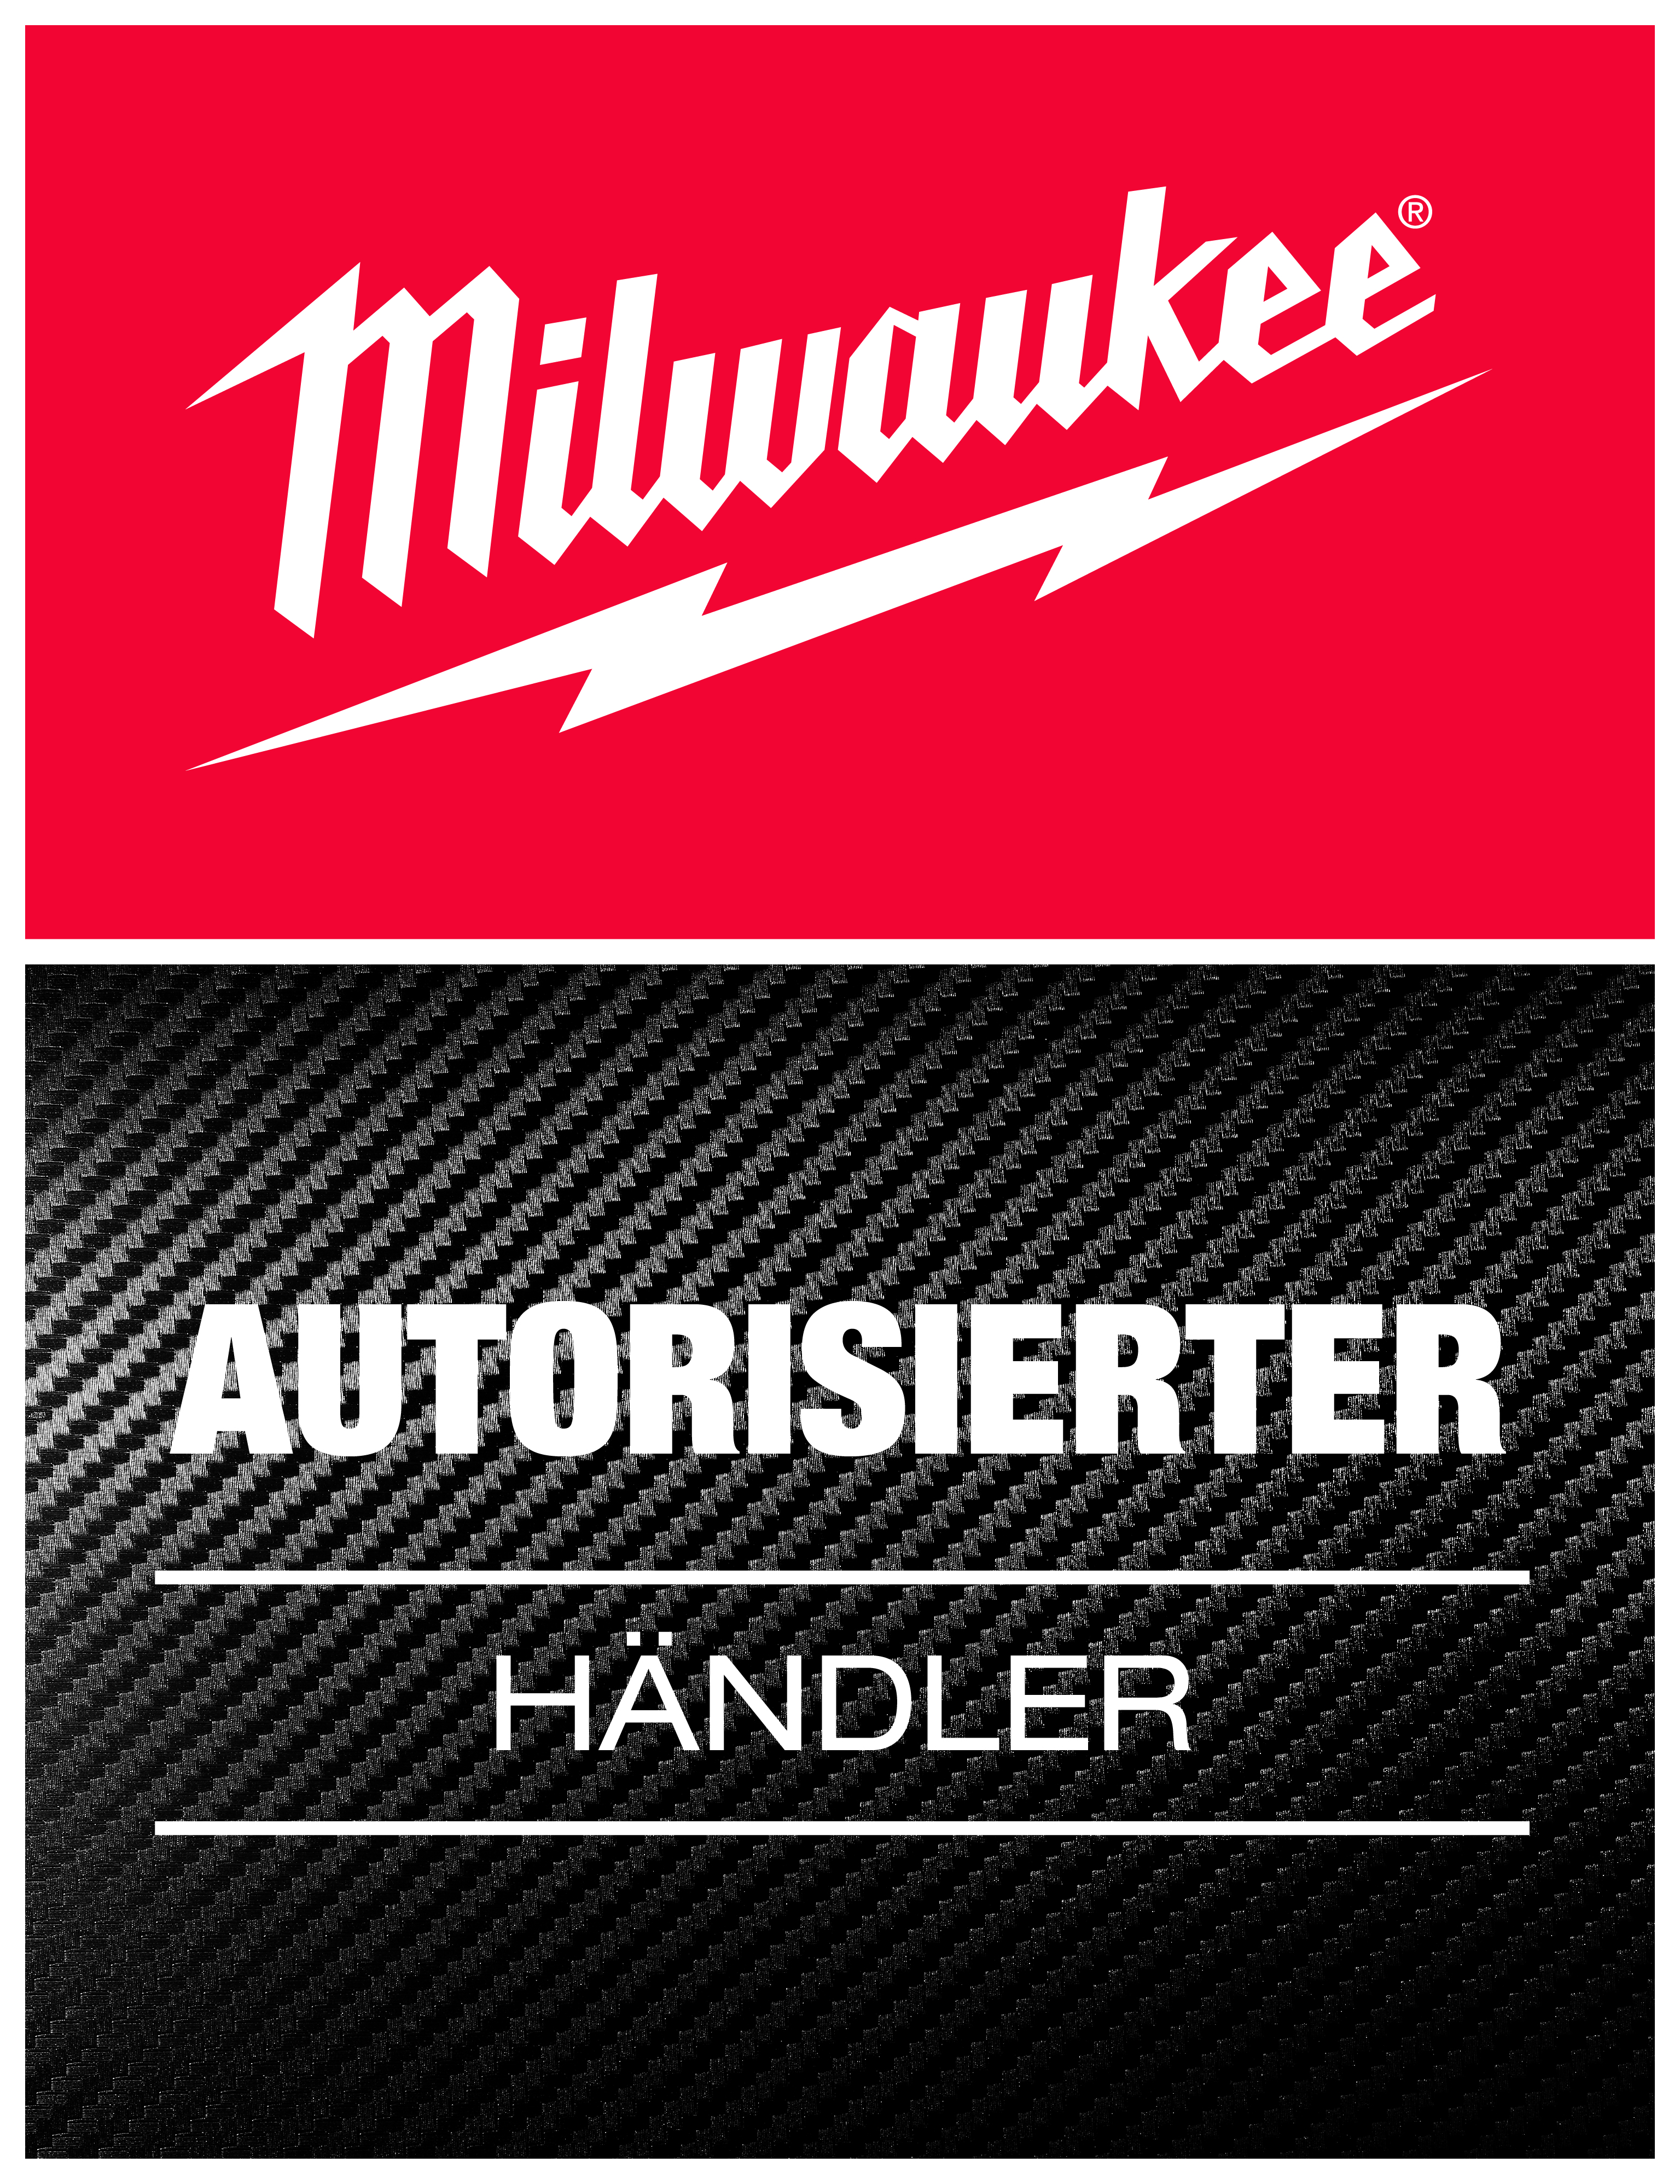 Milwaukee - 
Rund ums Holz
Hartwig GmbH